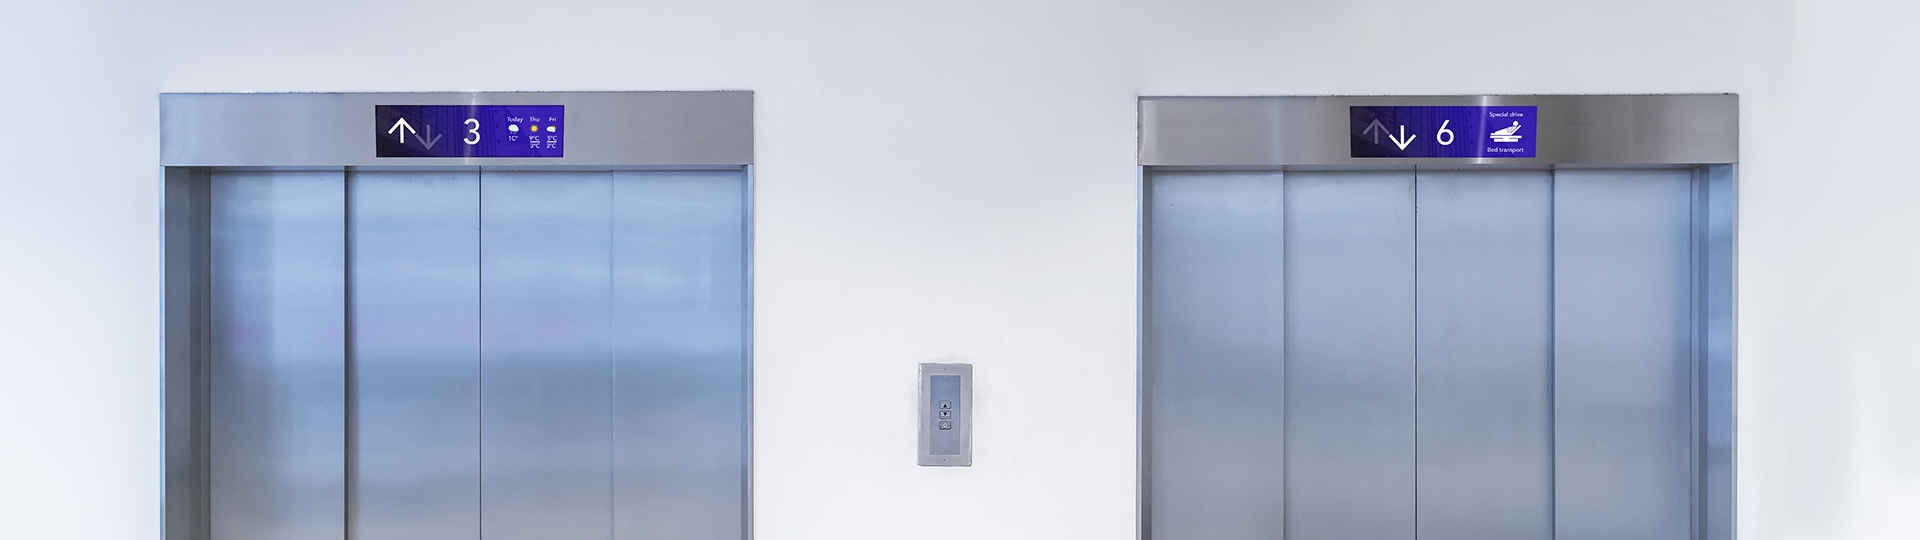 elevator displays in hospitals